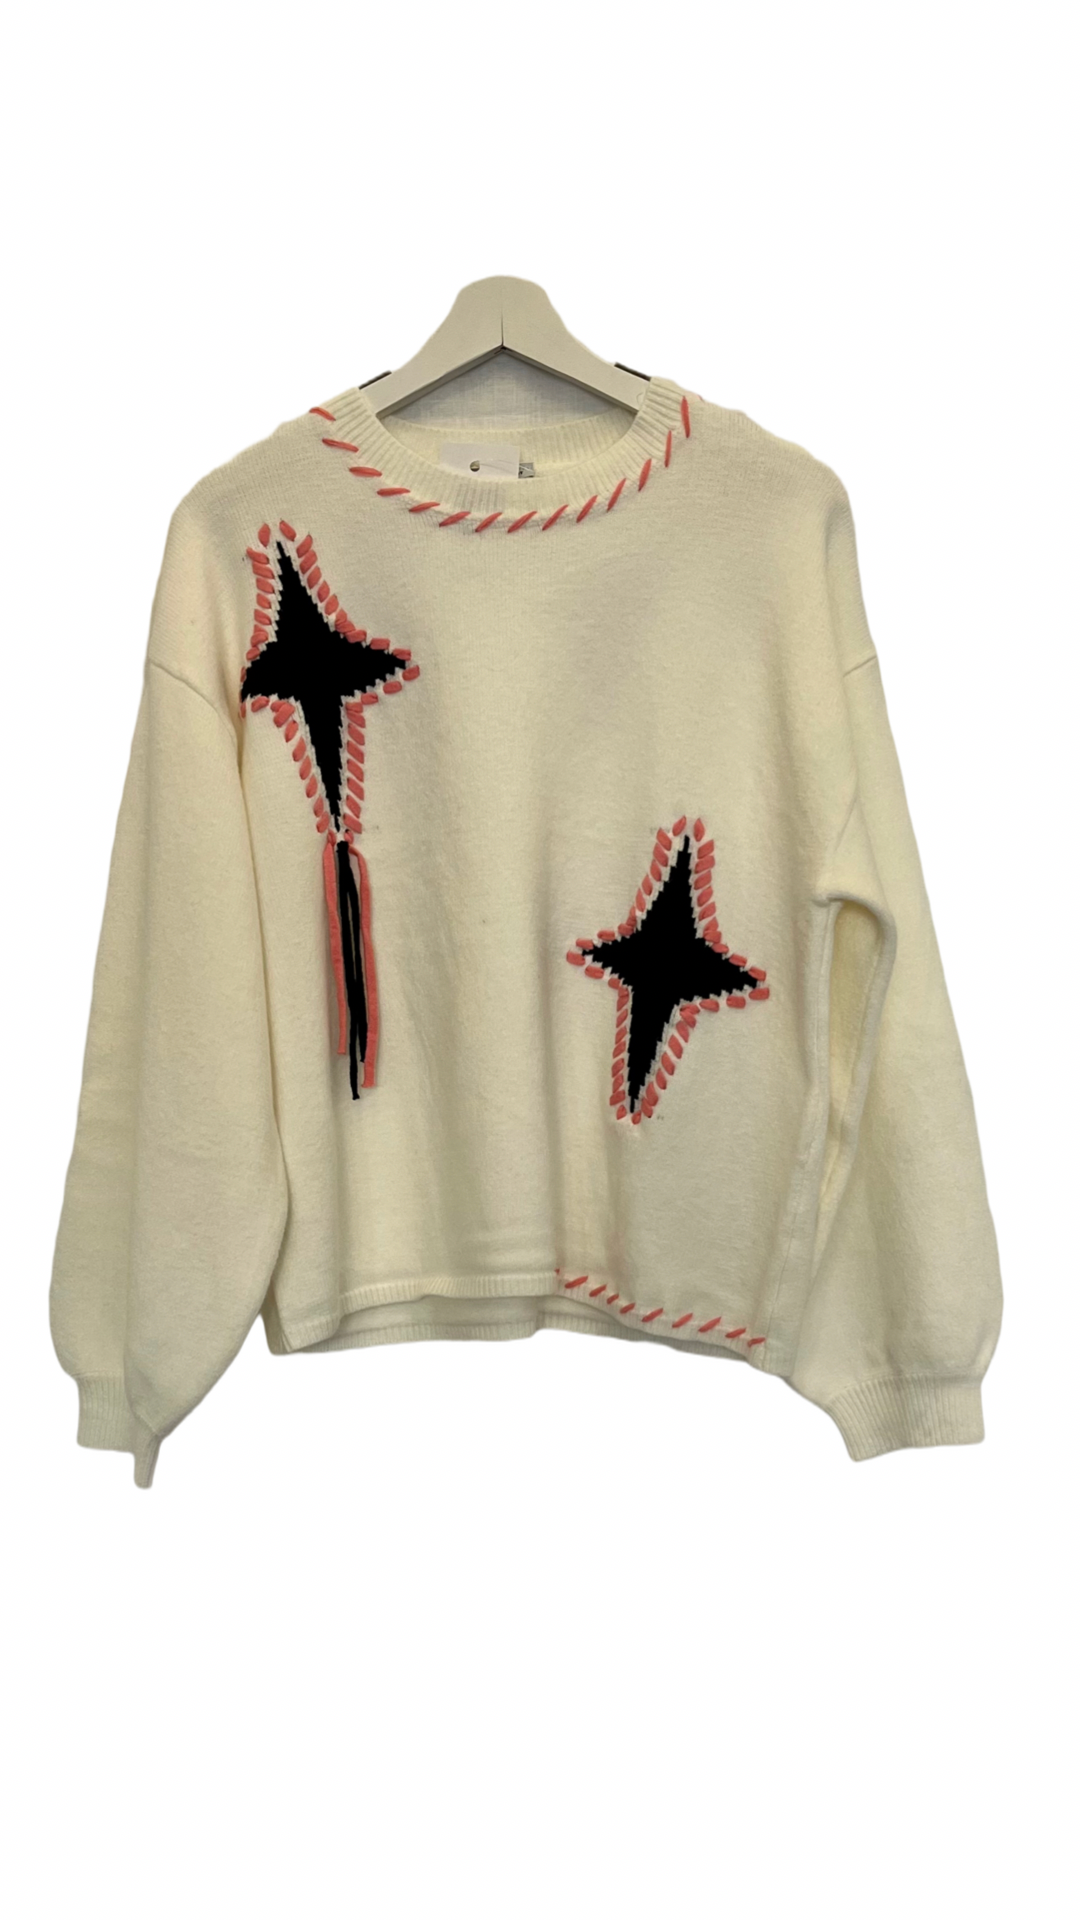 Starry Star Sweater